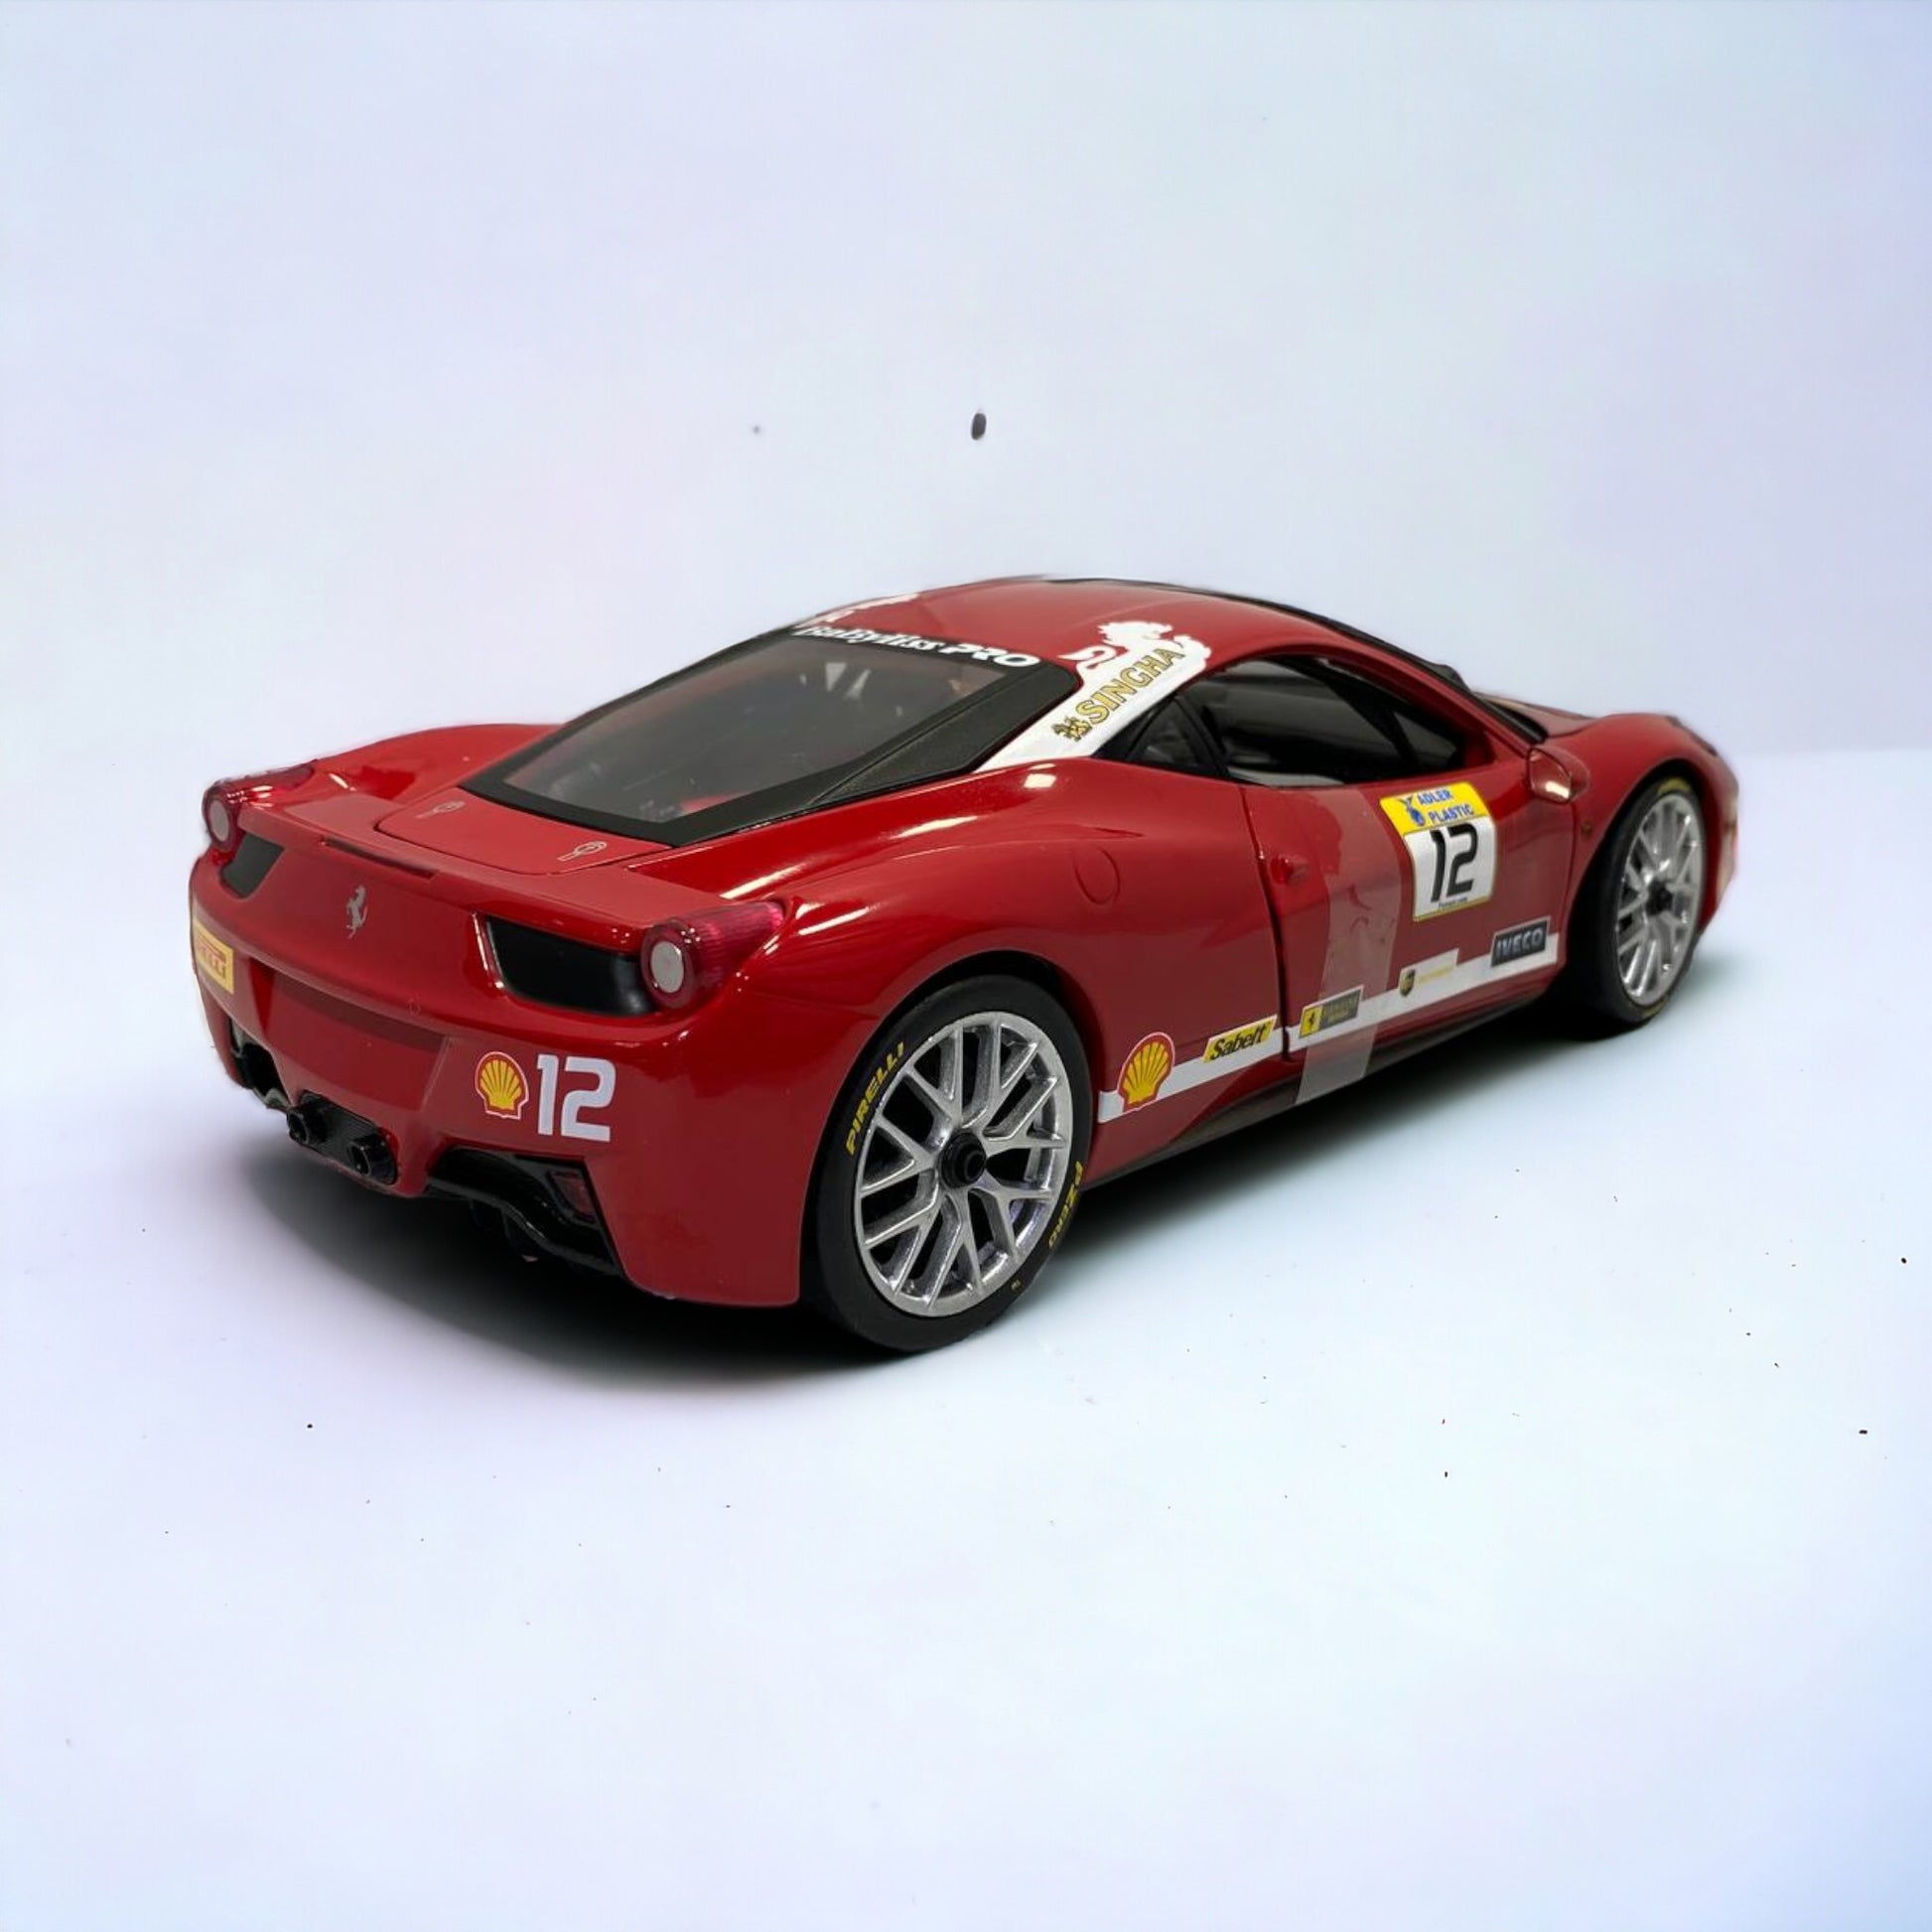 1/18 metal diecast HotWheels Ferrari 458 Challenge  Red Model Car|Sold in Dturman.com Dubai UAE.